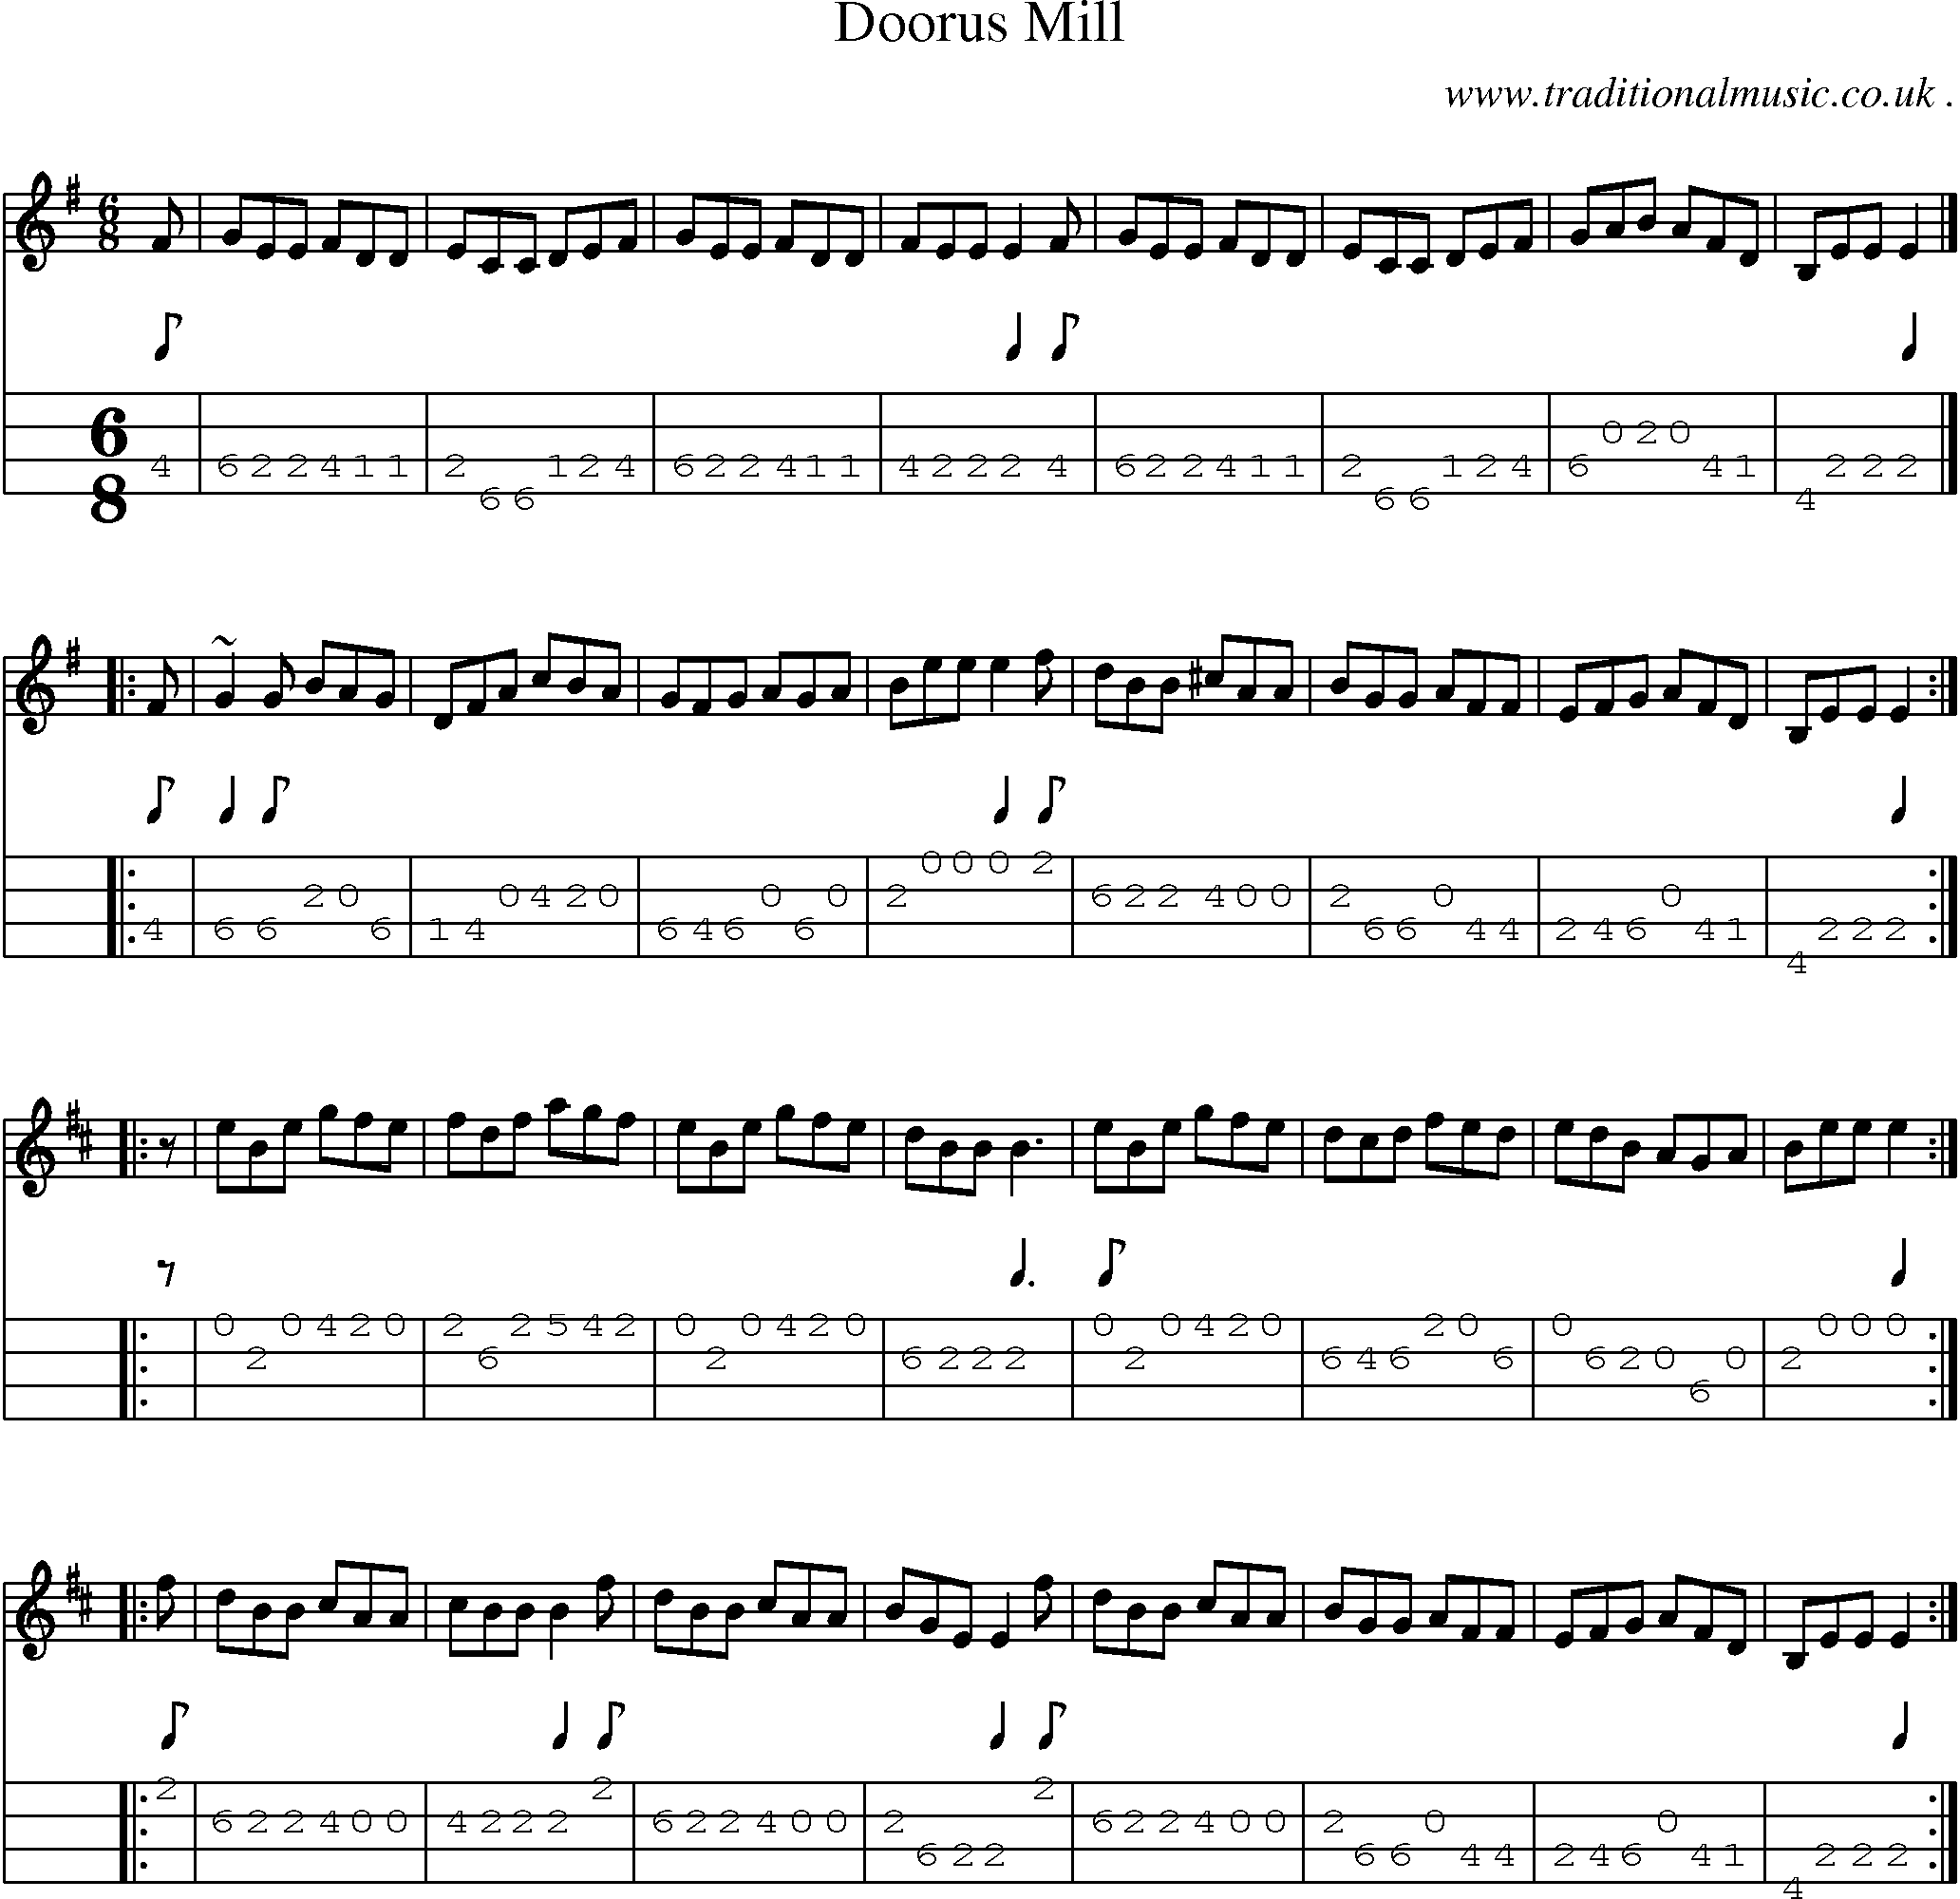 Sheet-music  score, Chords and Mandolin Tabs for Doorus Mill